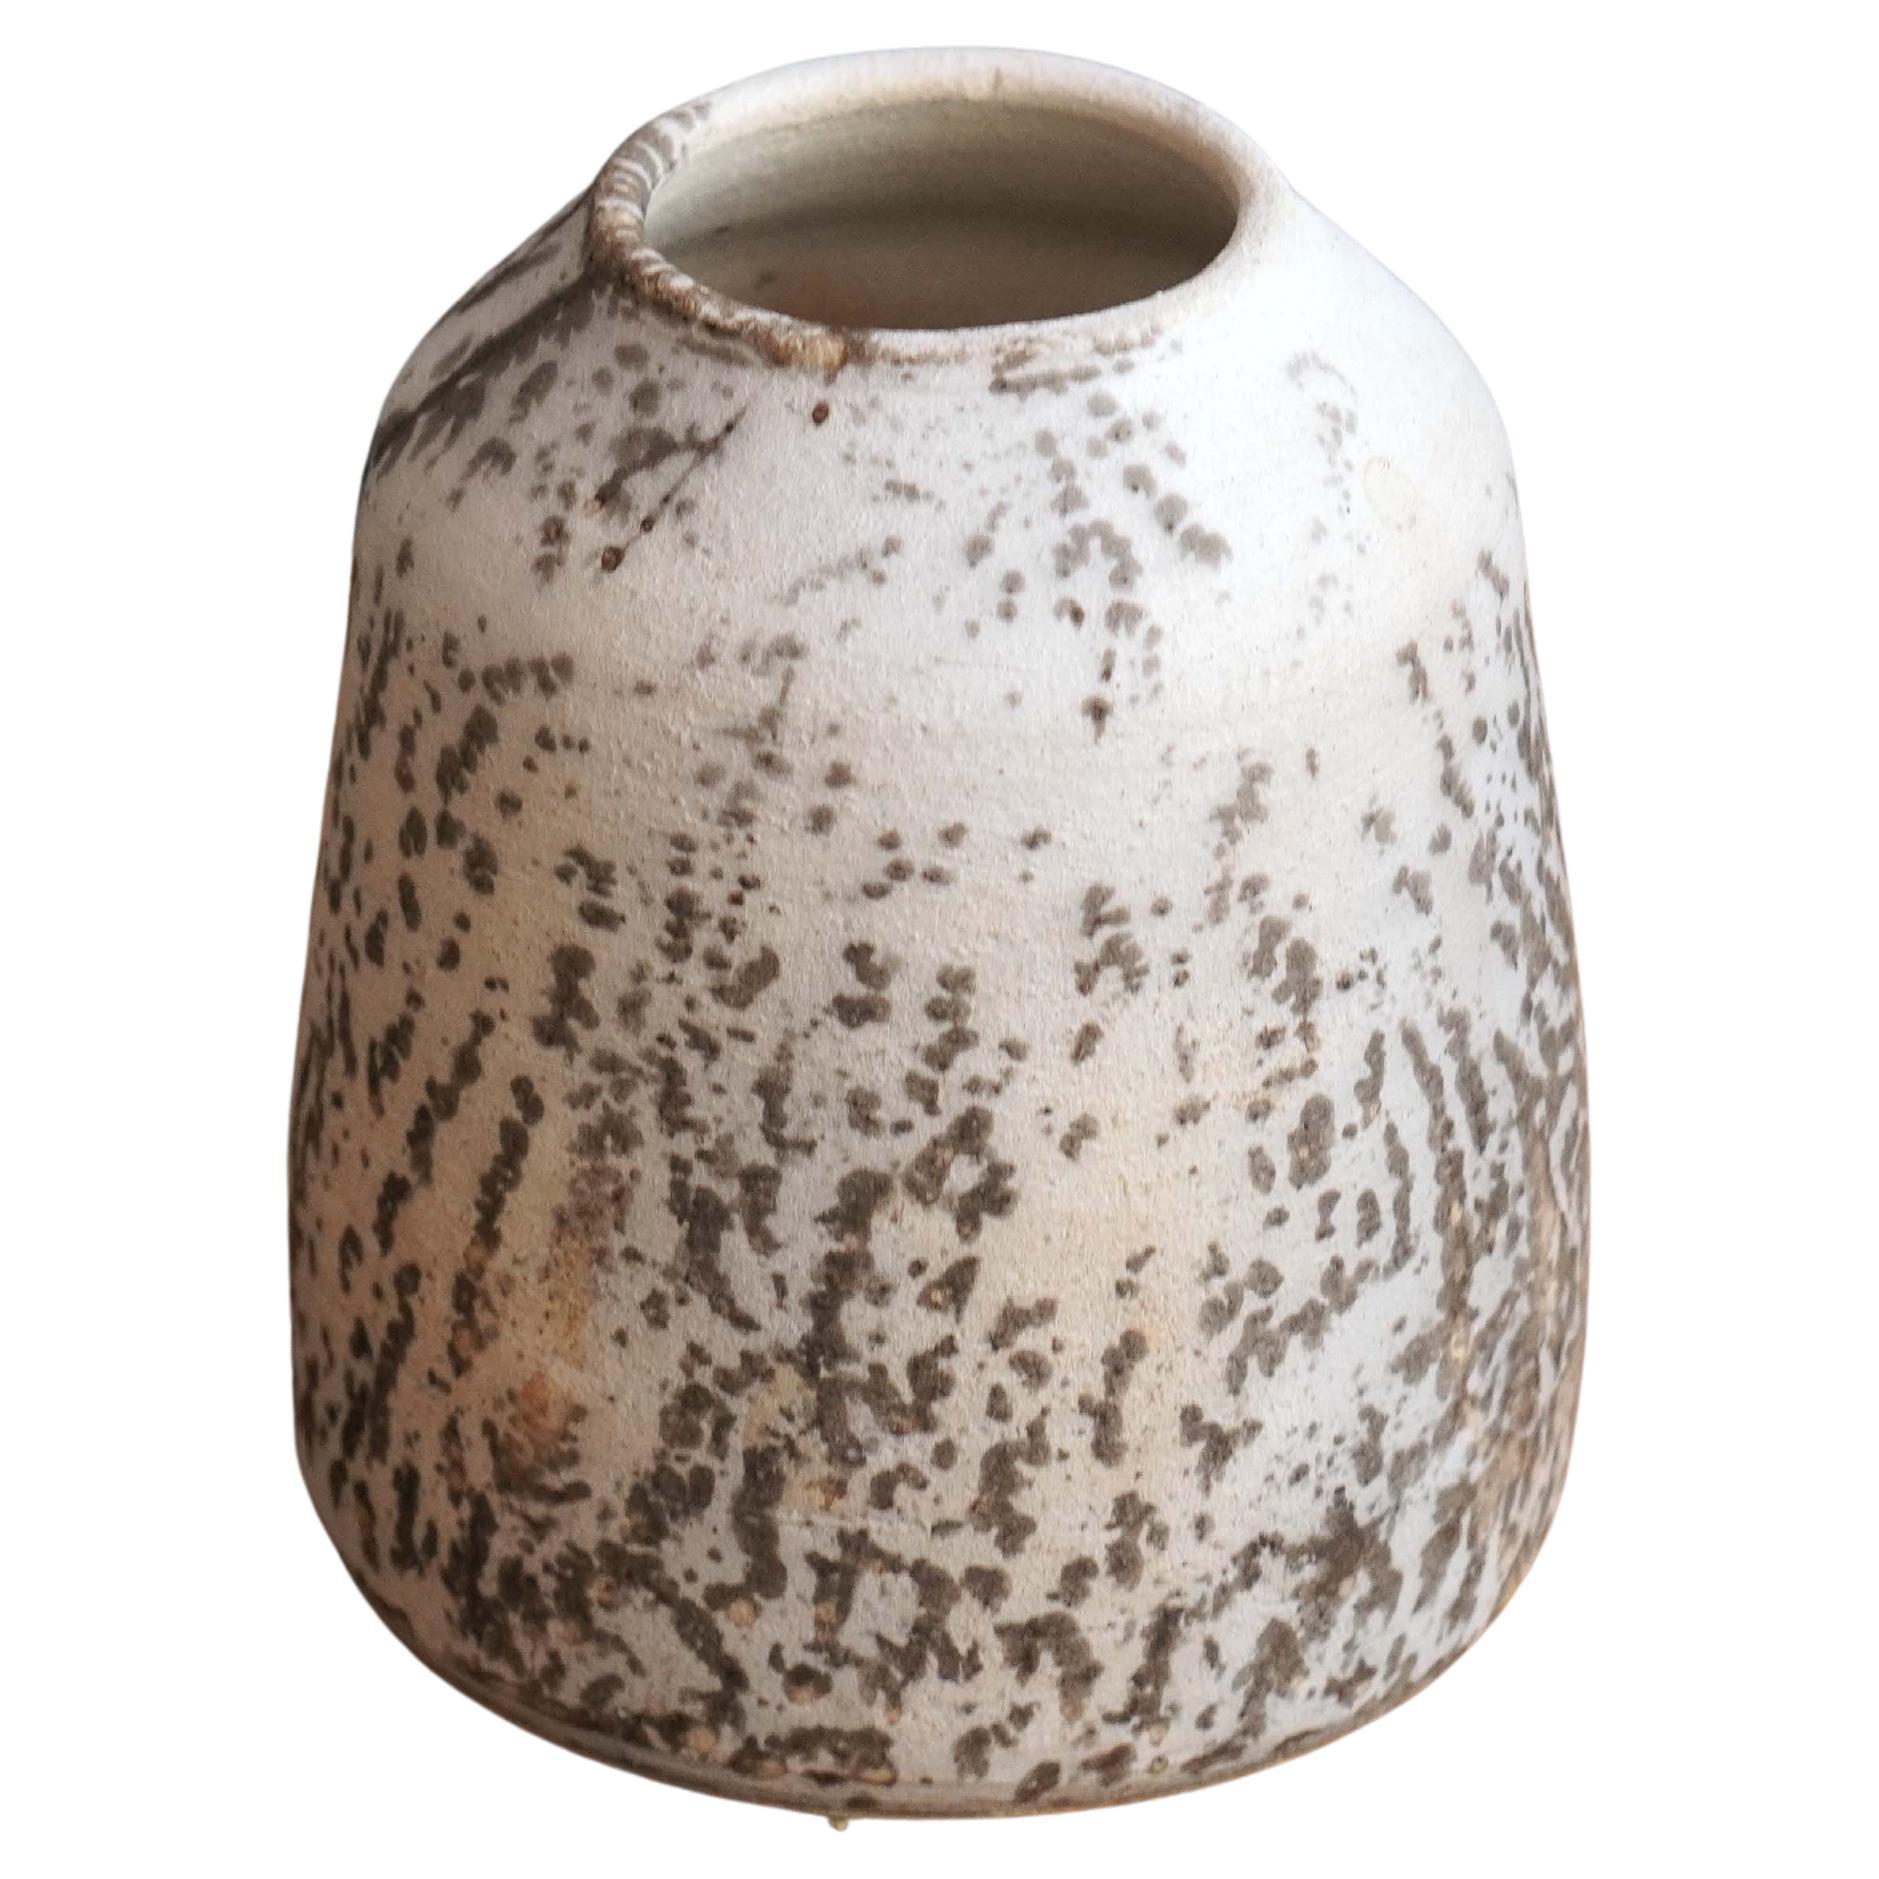 Suzu Raku Pottery Vase - Obvara - Handmade Ceramic Home Decor Gift